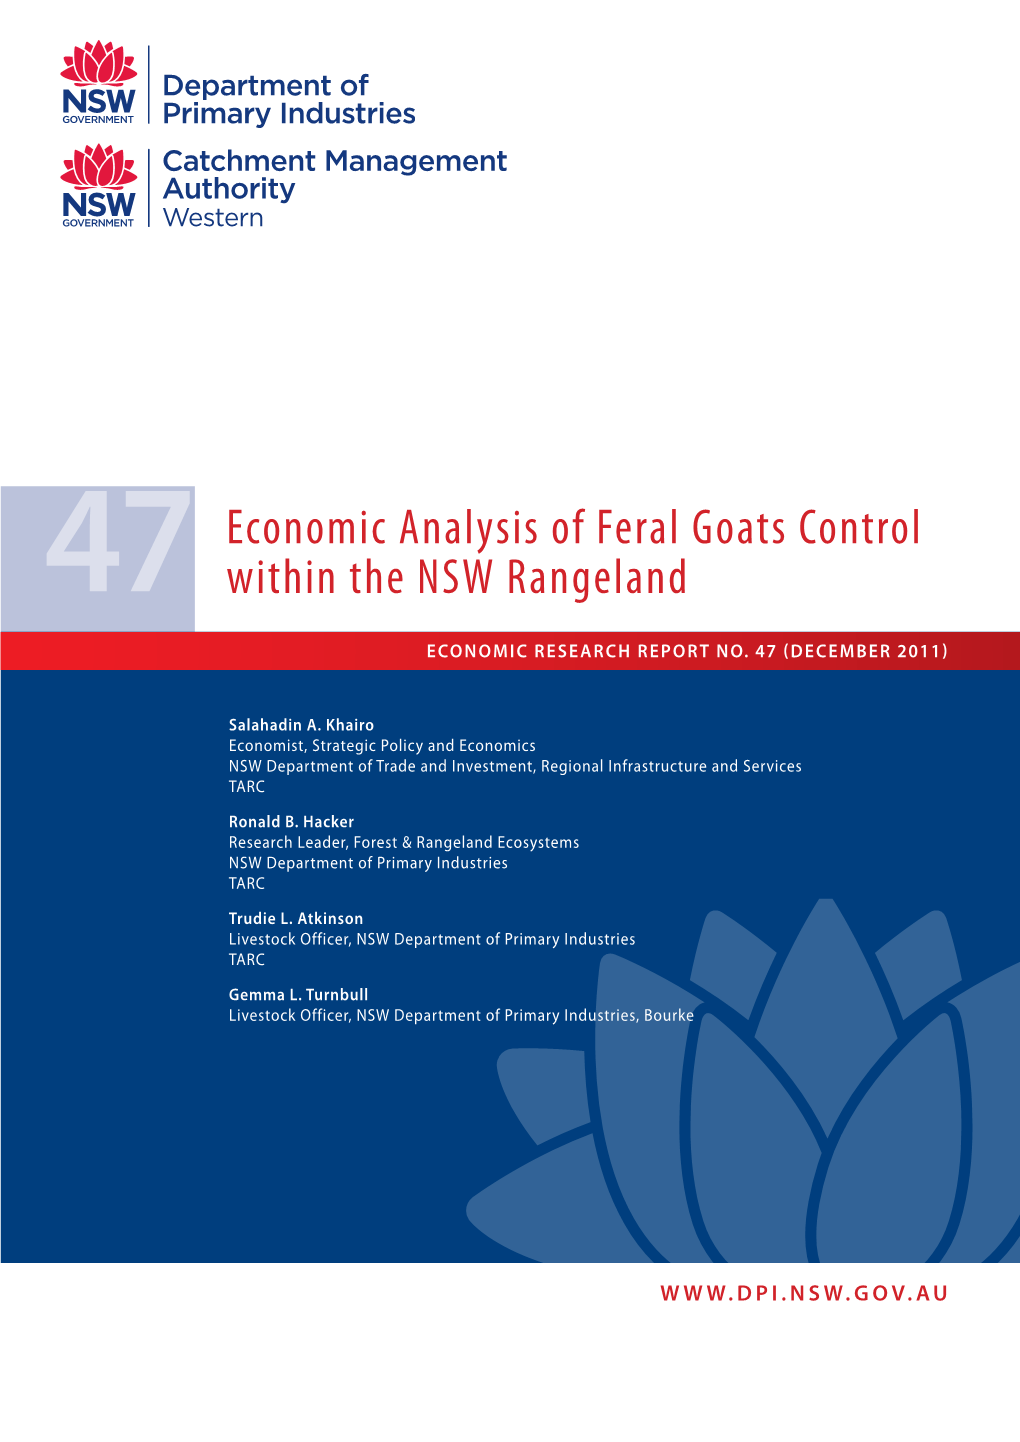 Economic Analysis of Feral Goat Control Within the NSW Rangeland